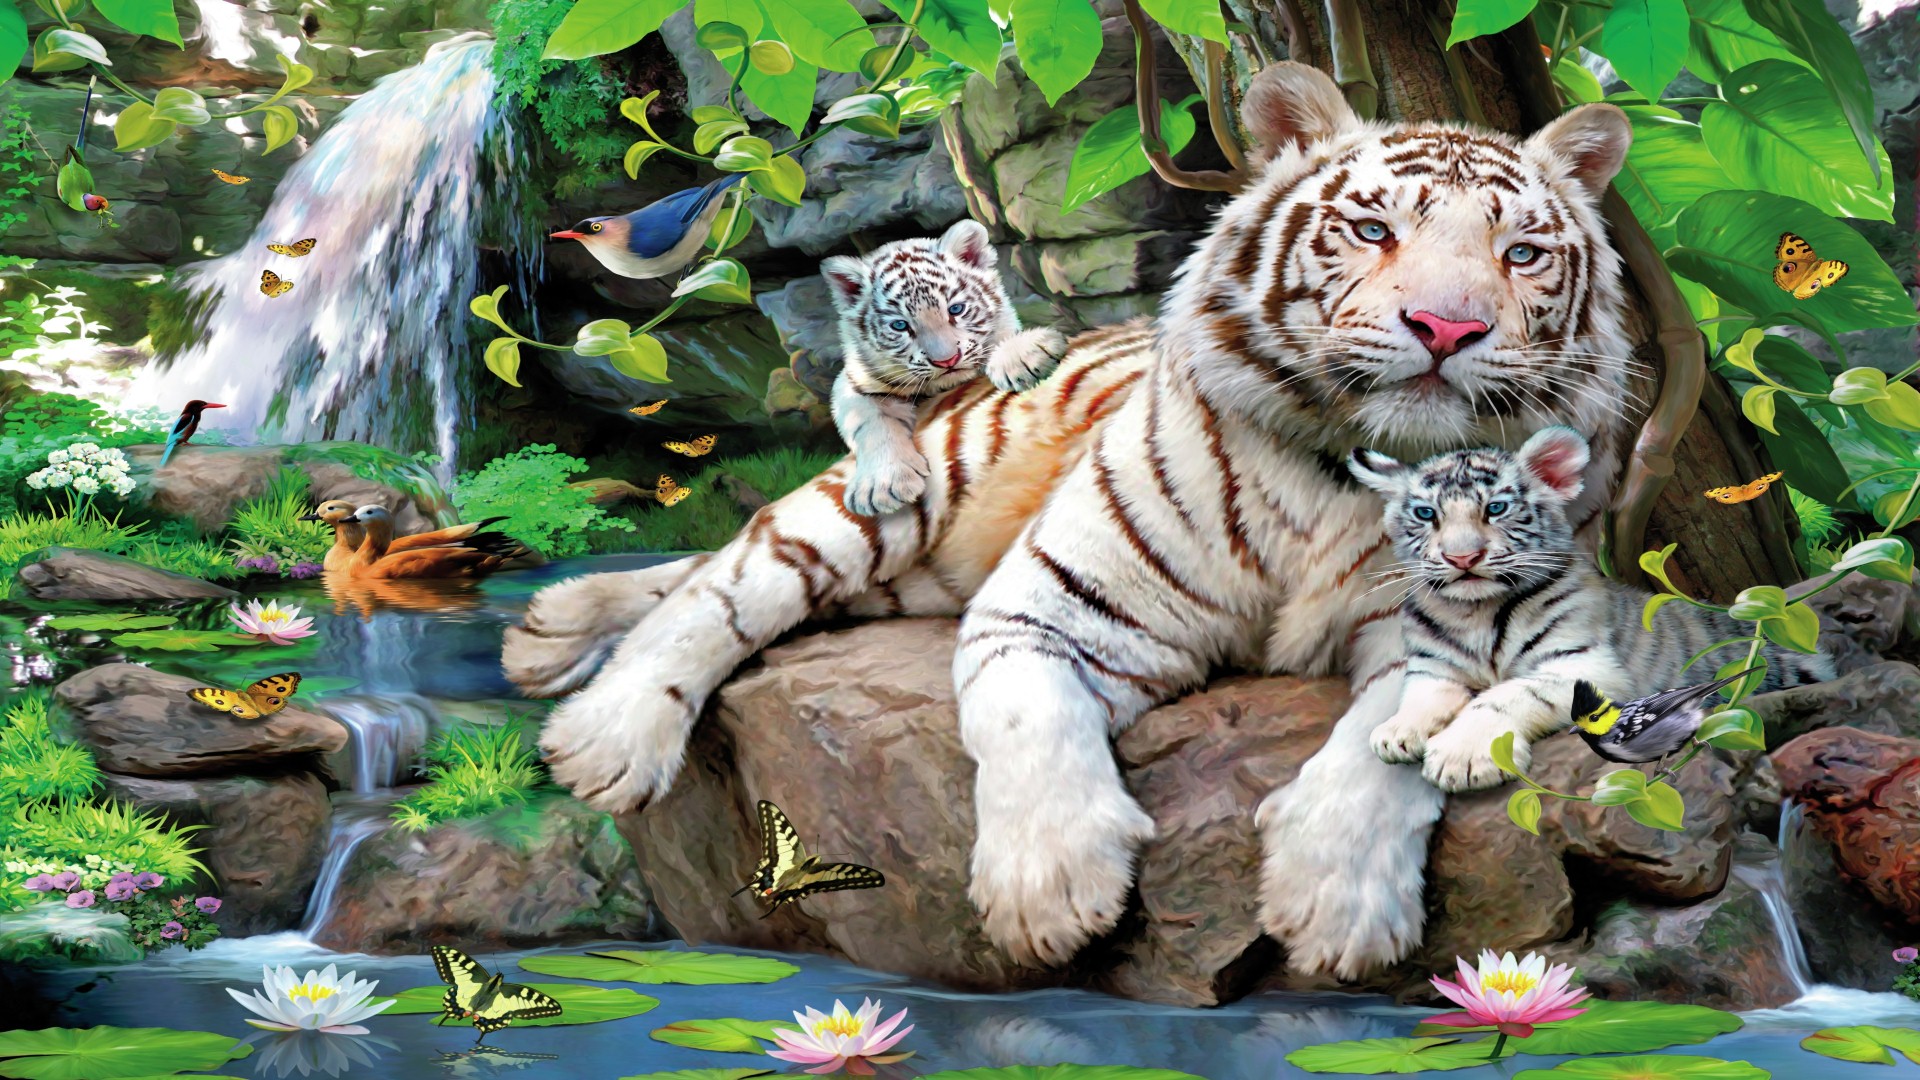 378557 descargar imagen animales, tigre blanco, ave, mariposa, cachorro, hoja, estanque, tigre, árbol, nenúfar, gatos: fondos de pantalla y protectores de pantalla gratis